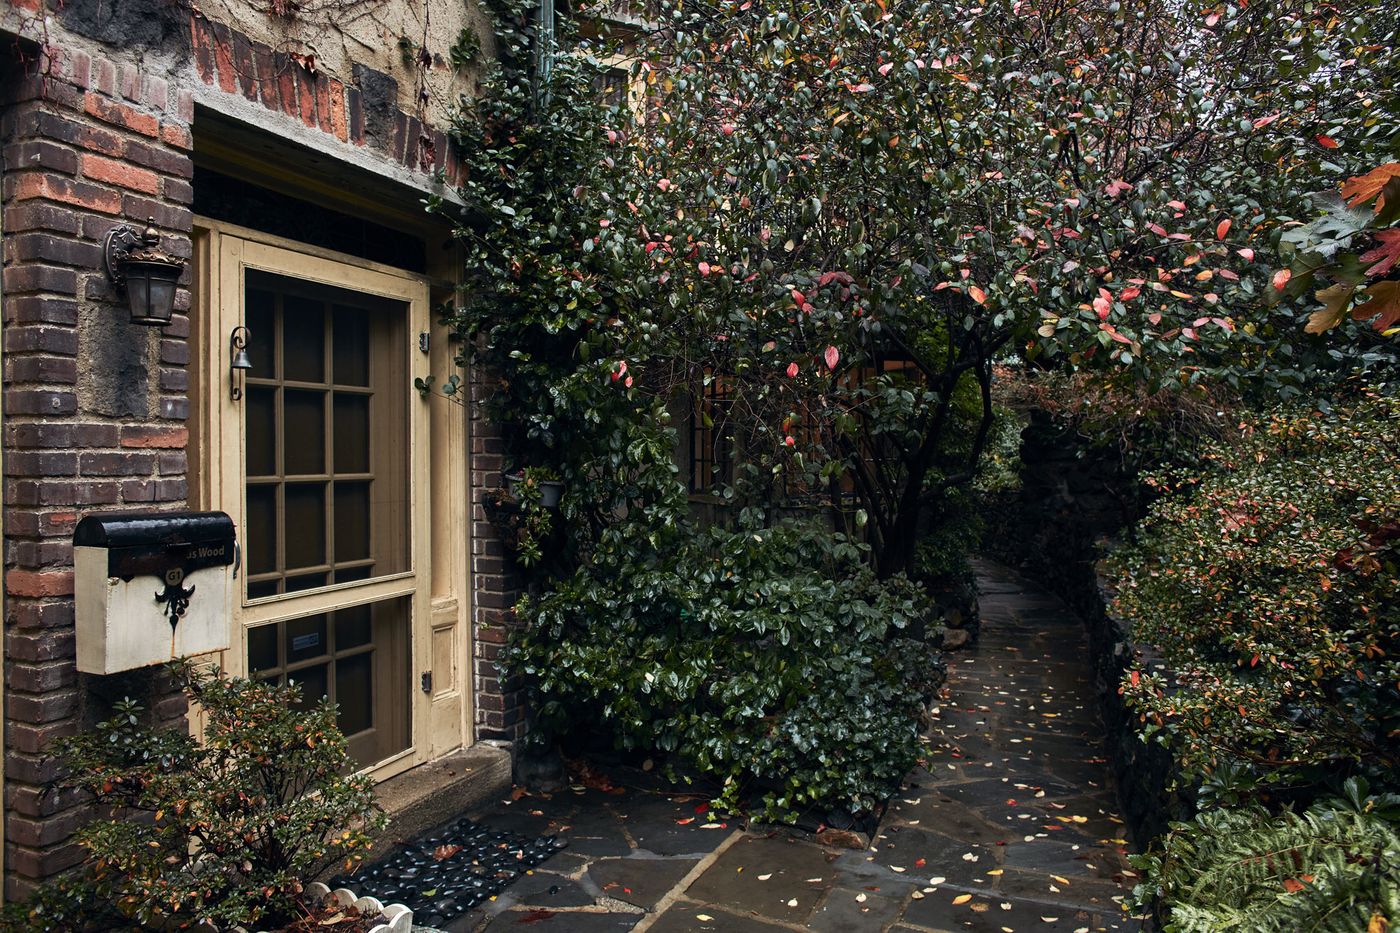 Inside NYC's Villa Charlotte Brontë, where units rarely list